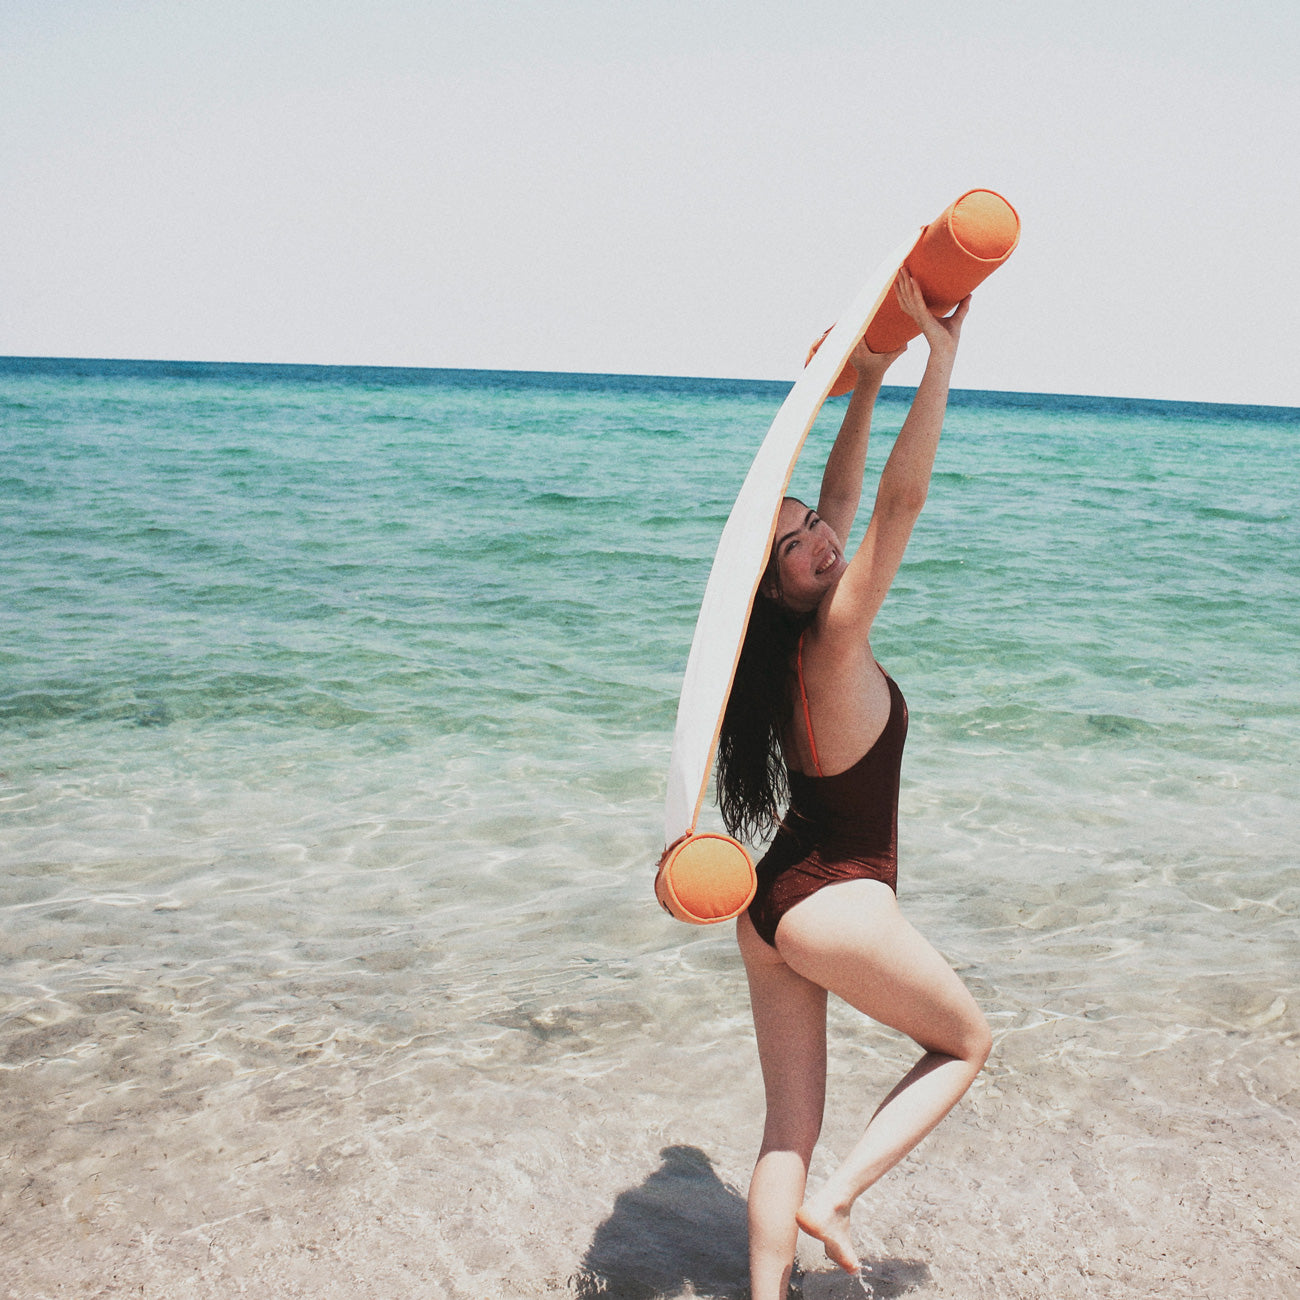 A women on a beach dragging a luxury pool float in the wind.